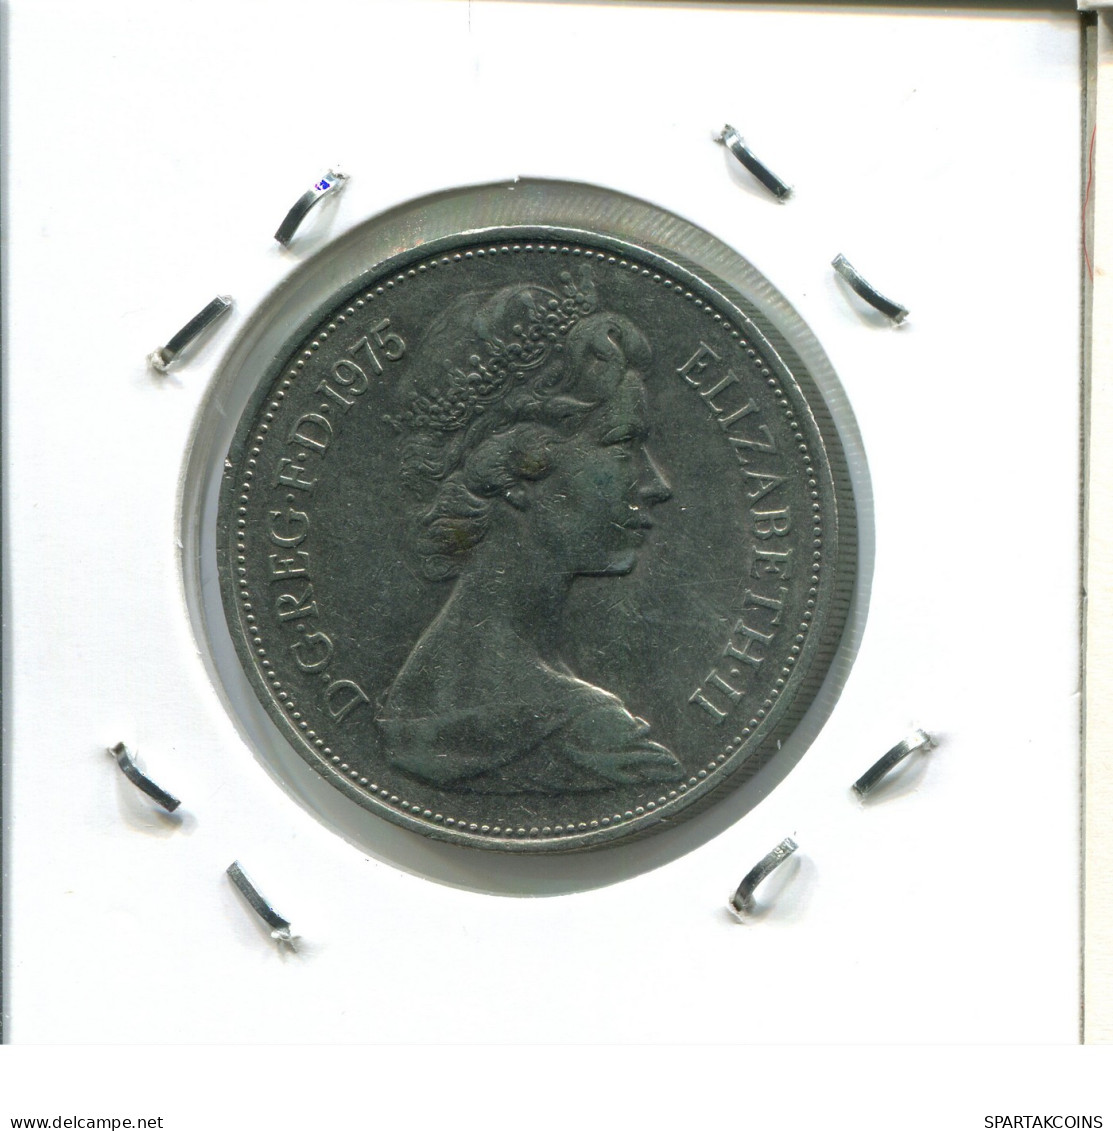 10 PENCE 1975 UK GREAT BRITAIN Coin #AX006.U - 10 Pence & 10 New Pence